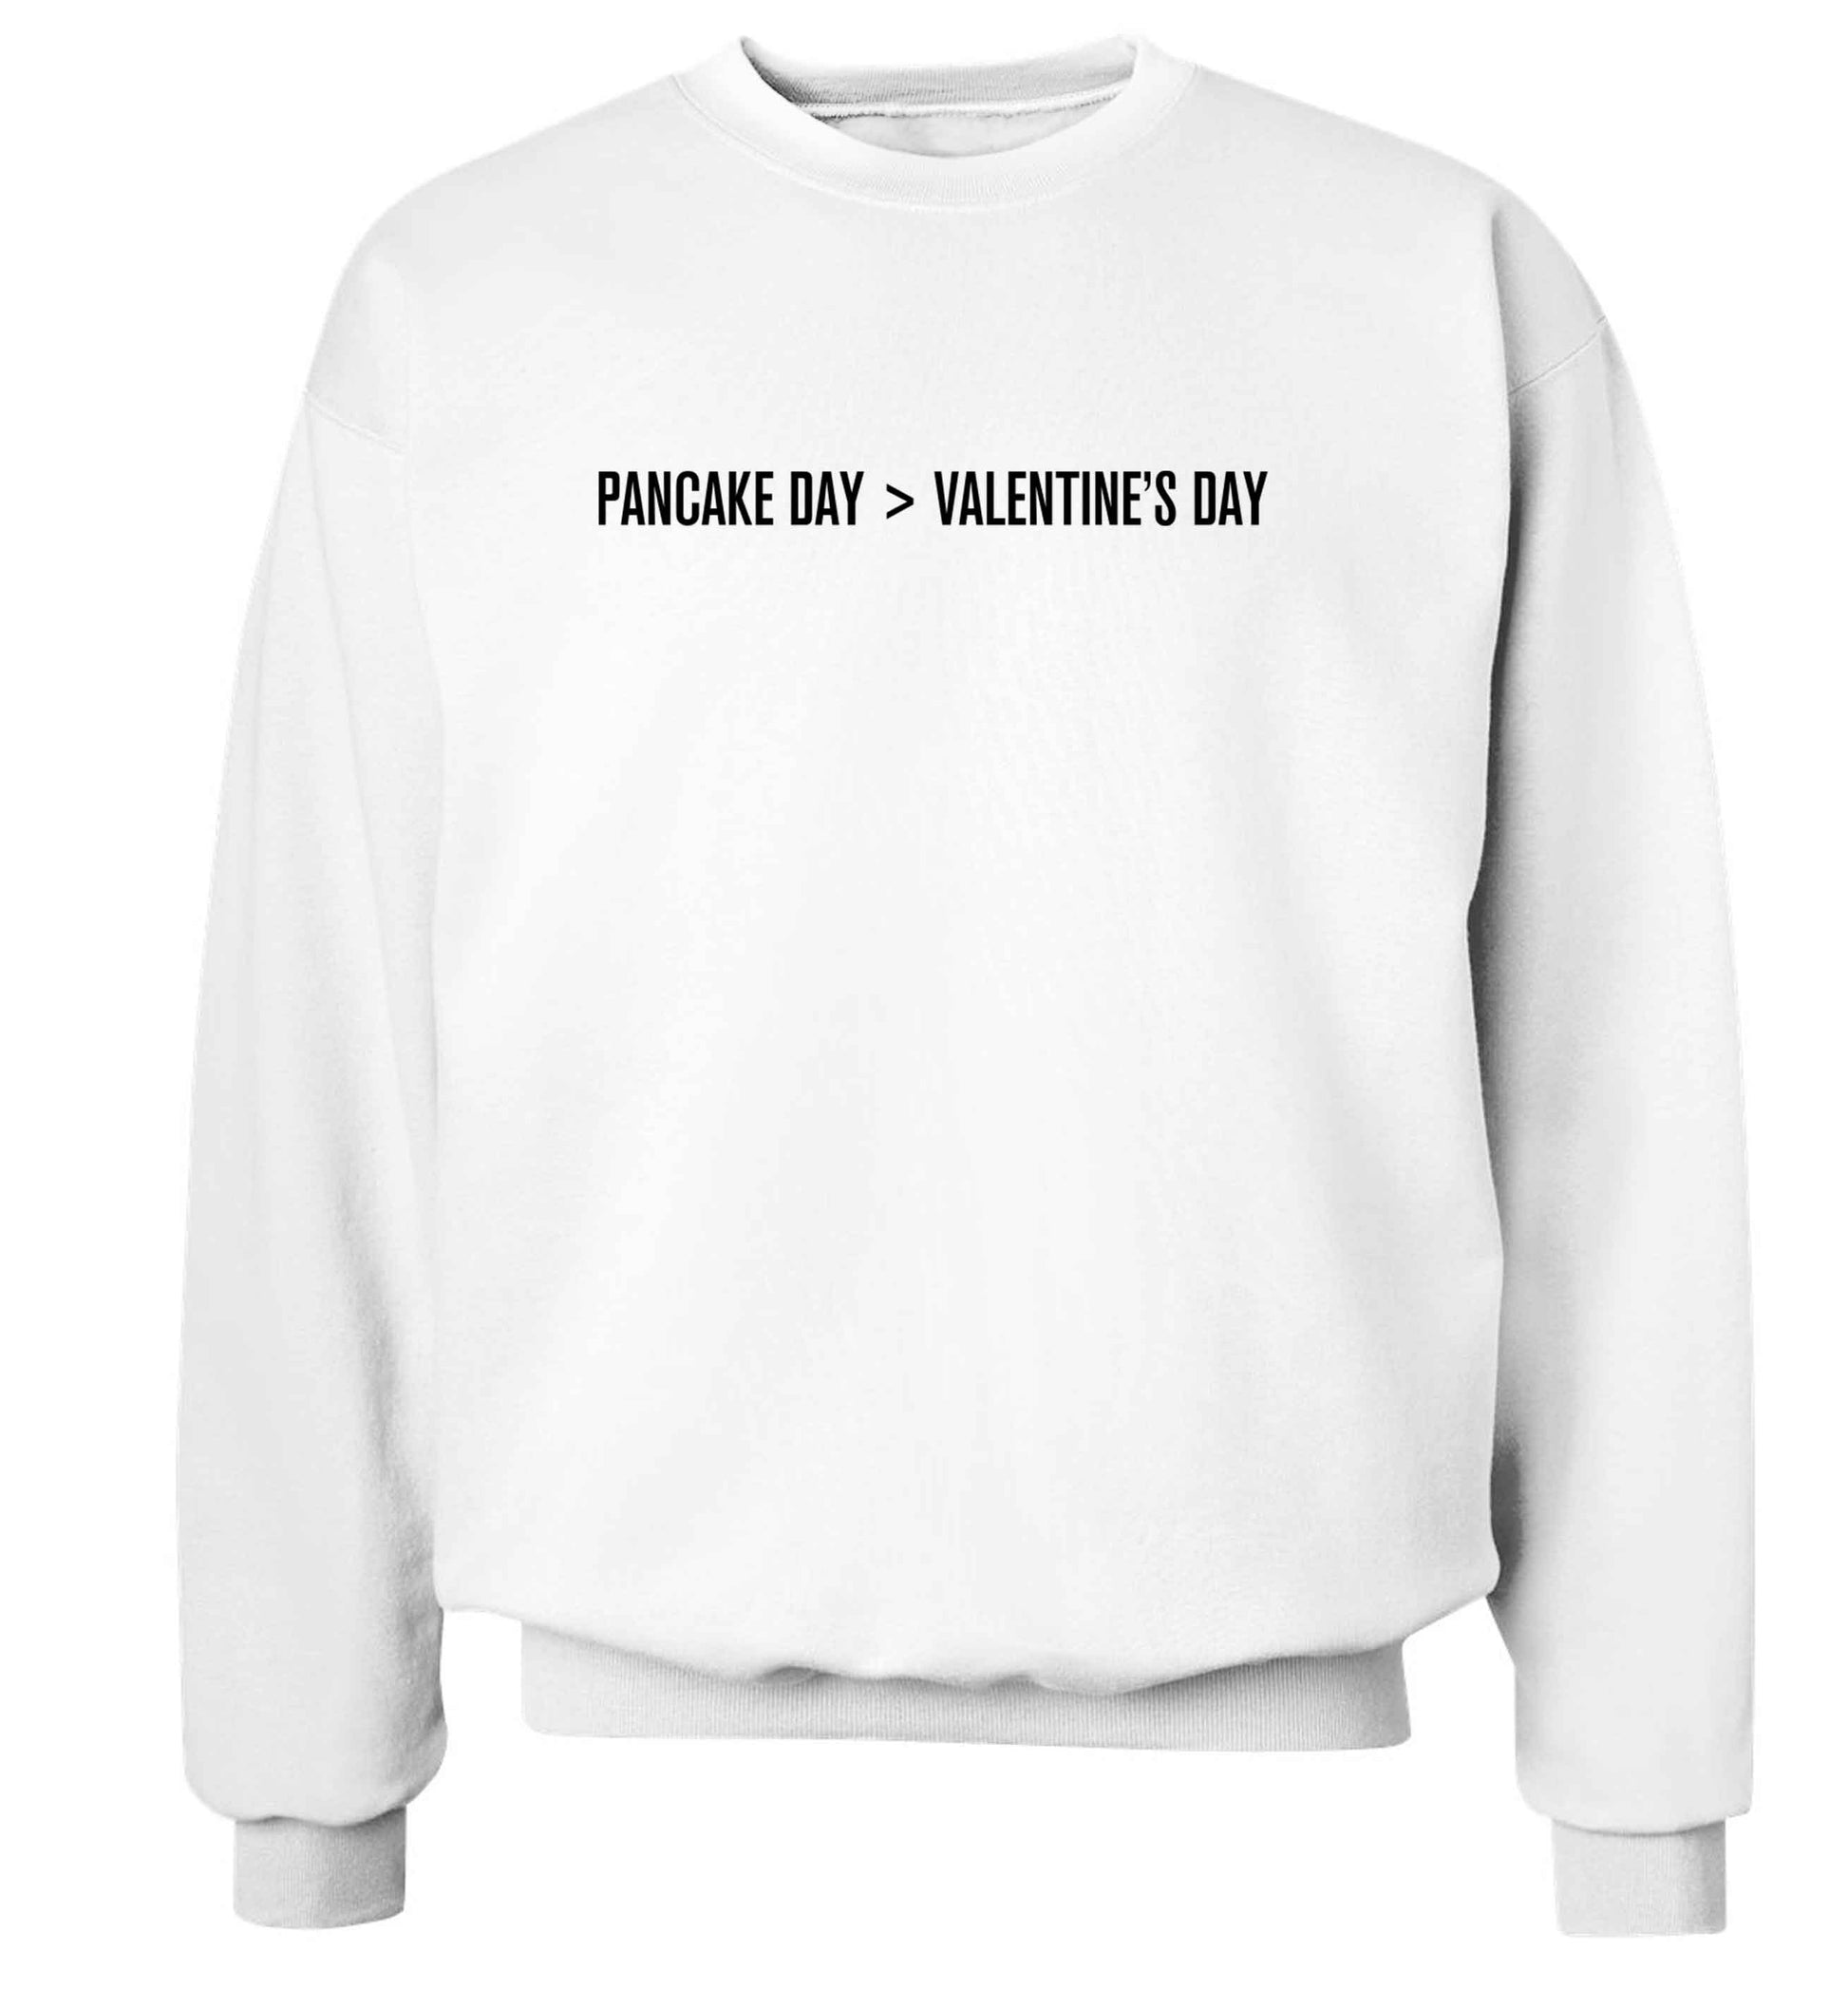 Pancake day > valentines day adult's unisex white sweater 2XL